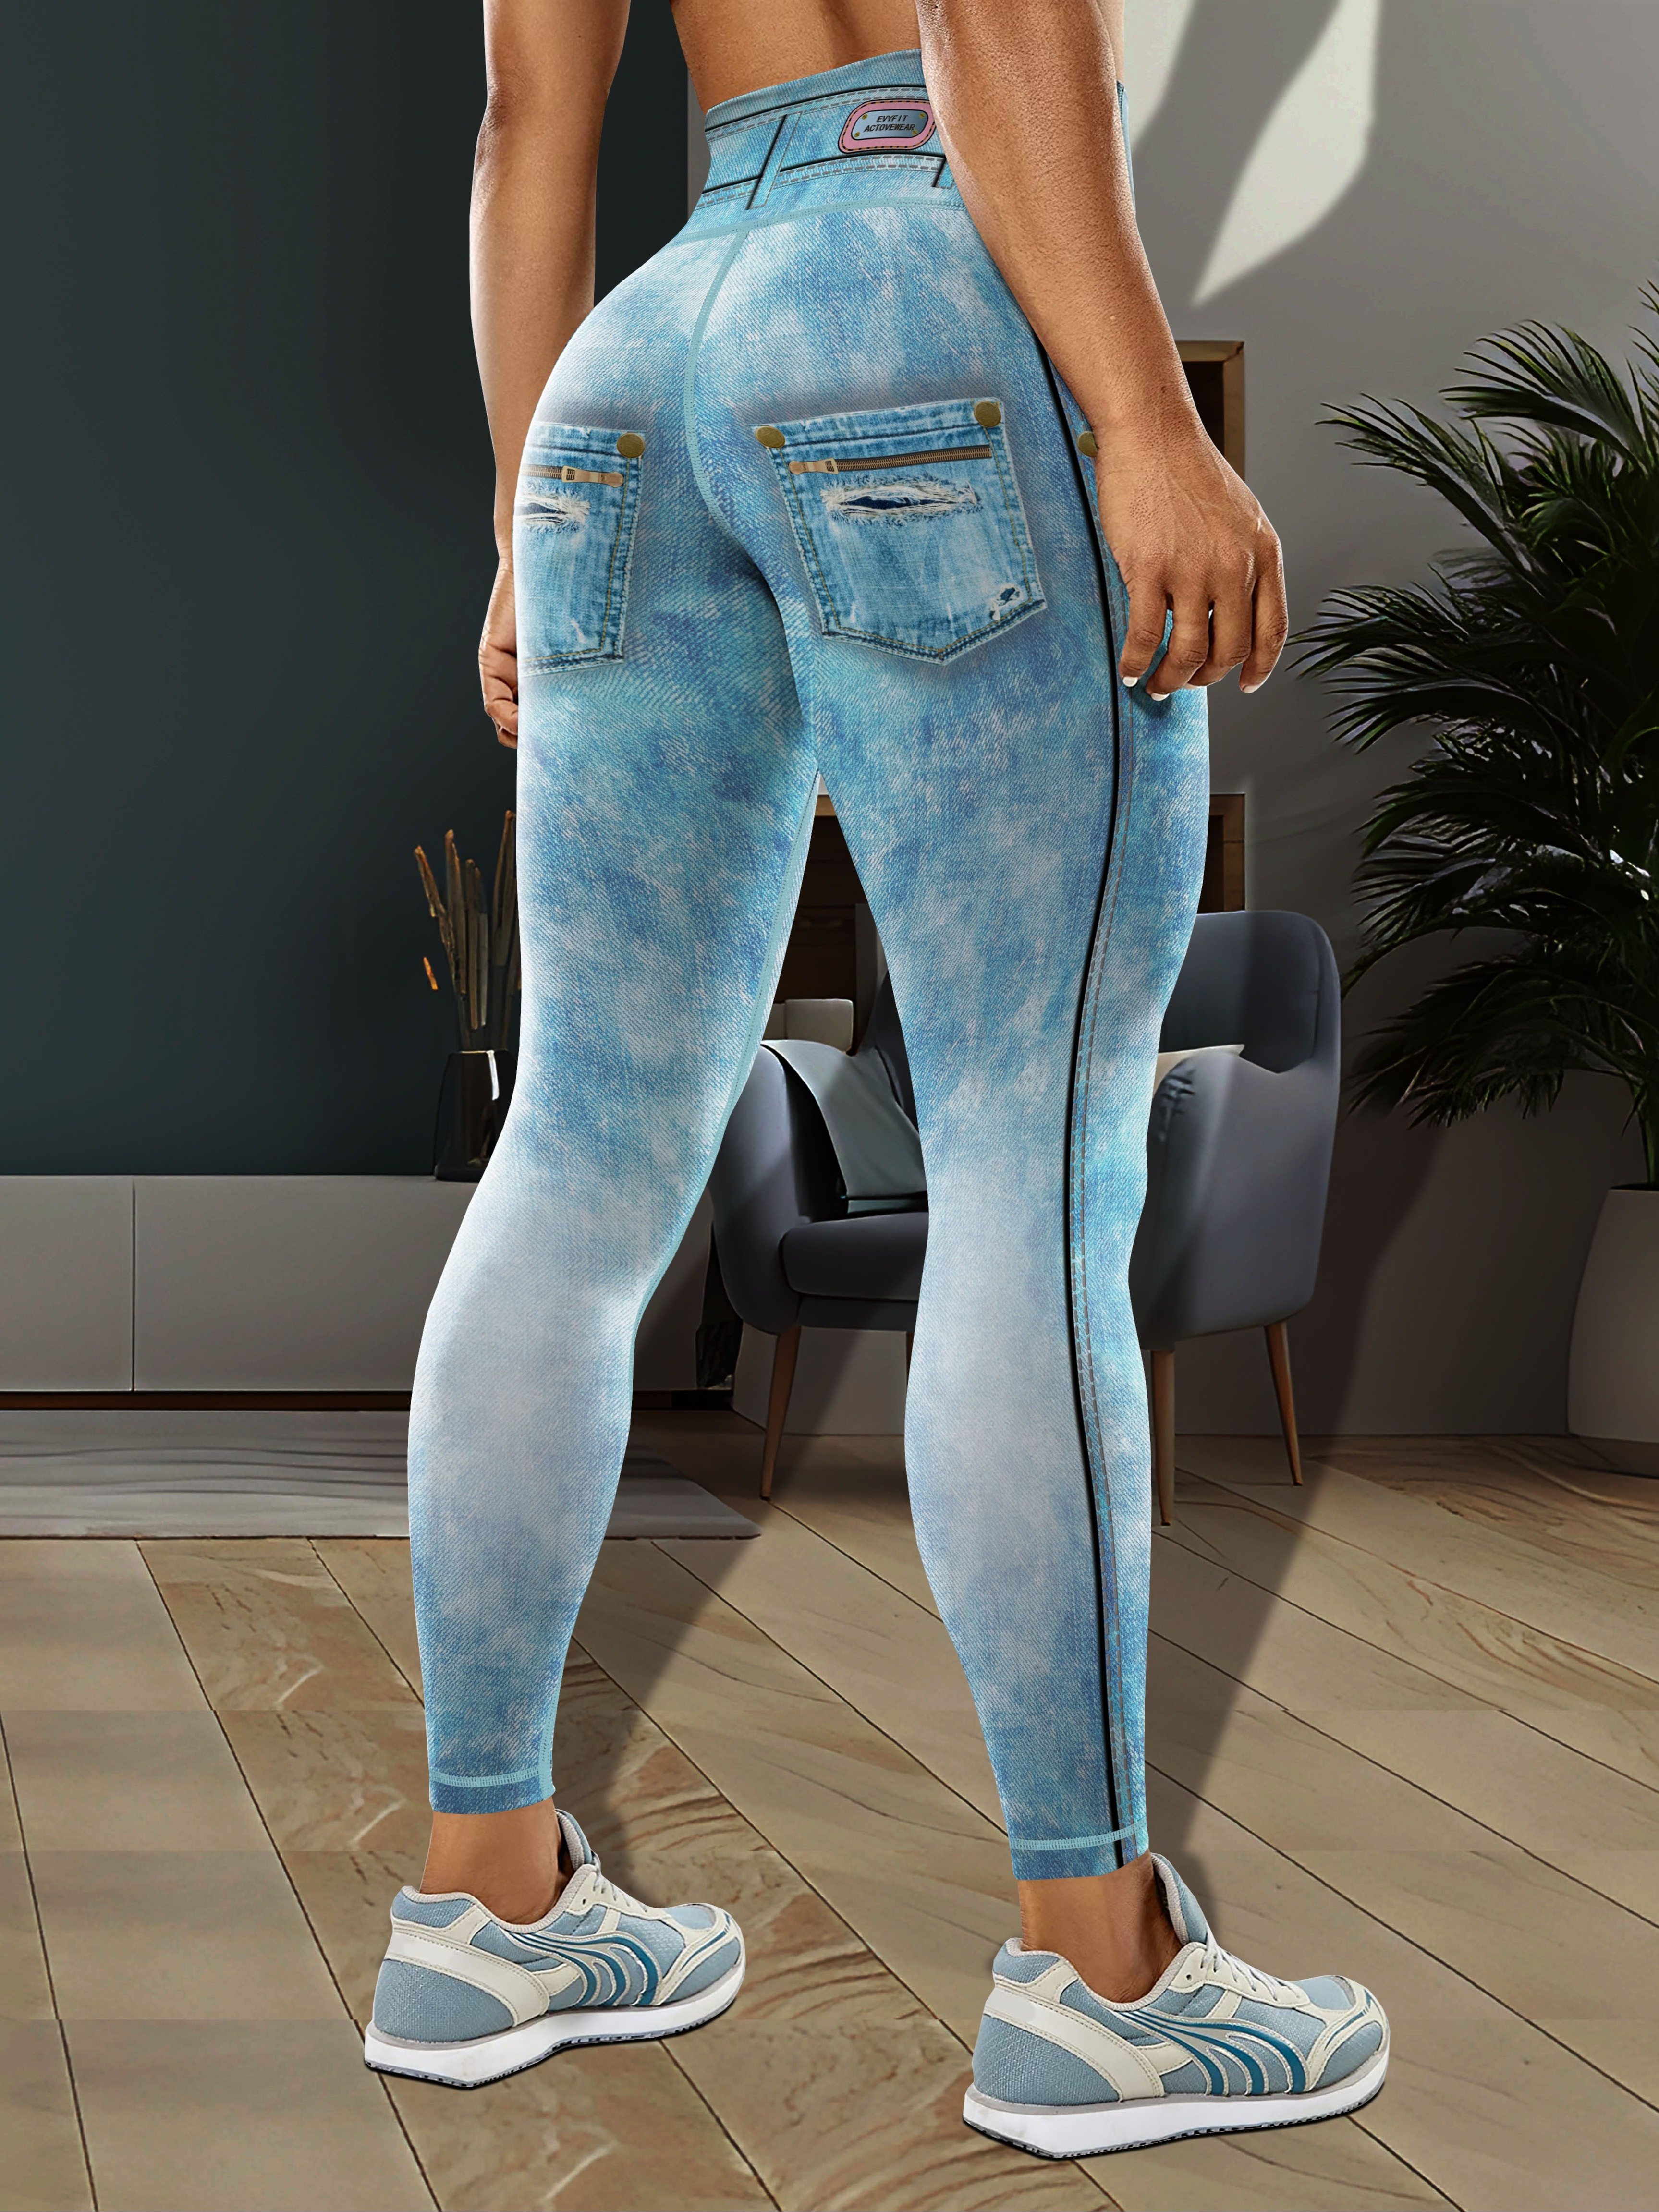 YUNAFFT Yoga Pants for Women Clearance Plus Size Women's Athletic And  Gentle Large Digital Printed Denim Sports Leggings Yoga Pants 